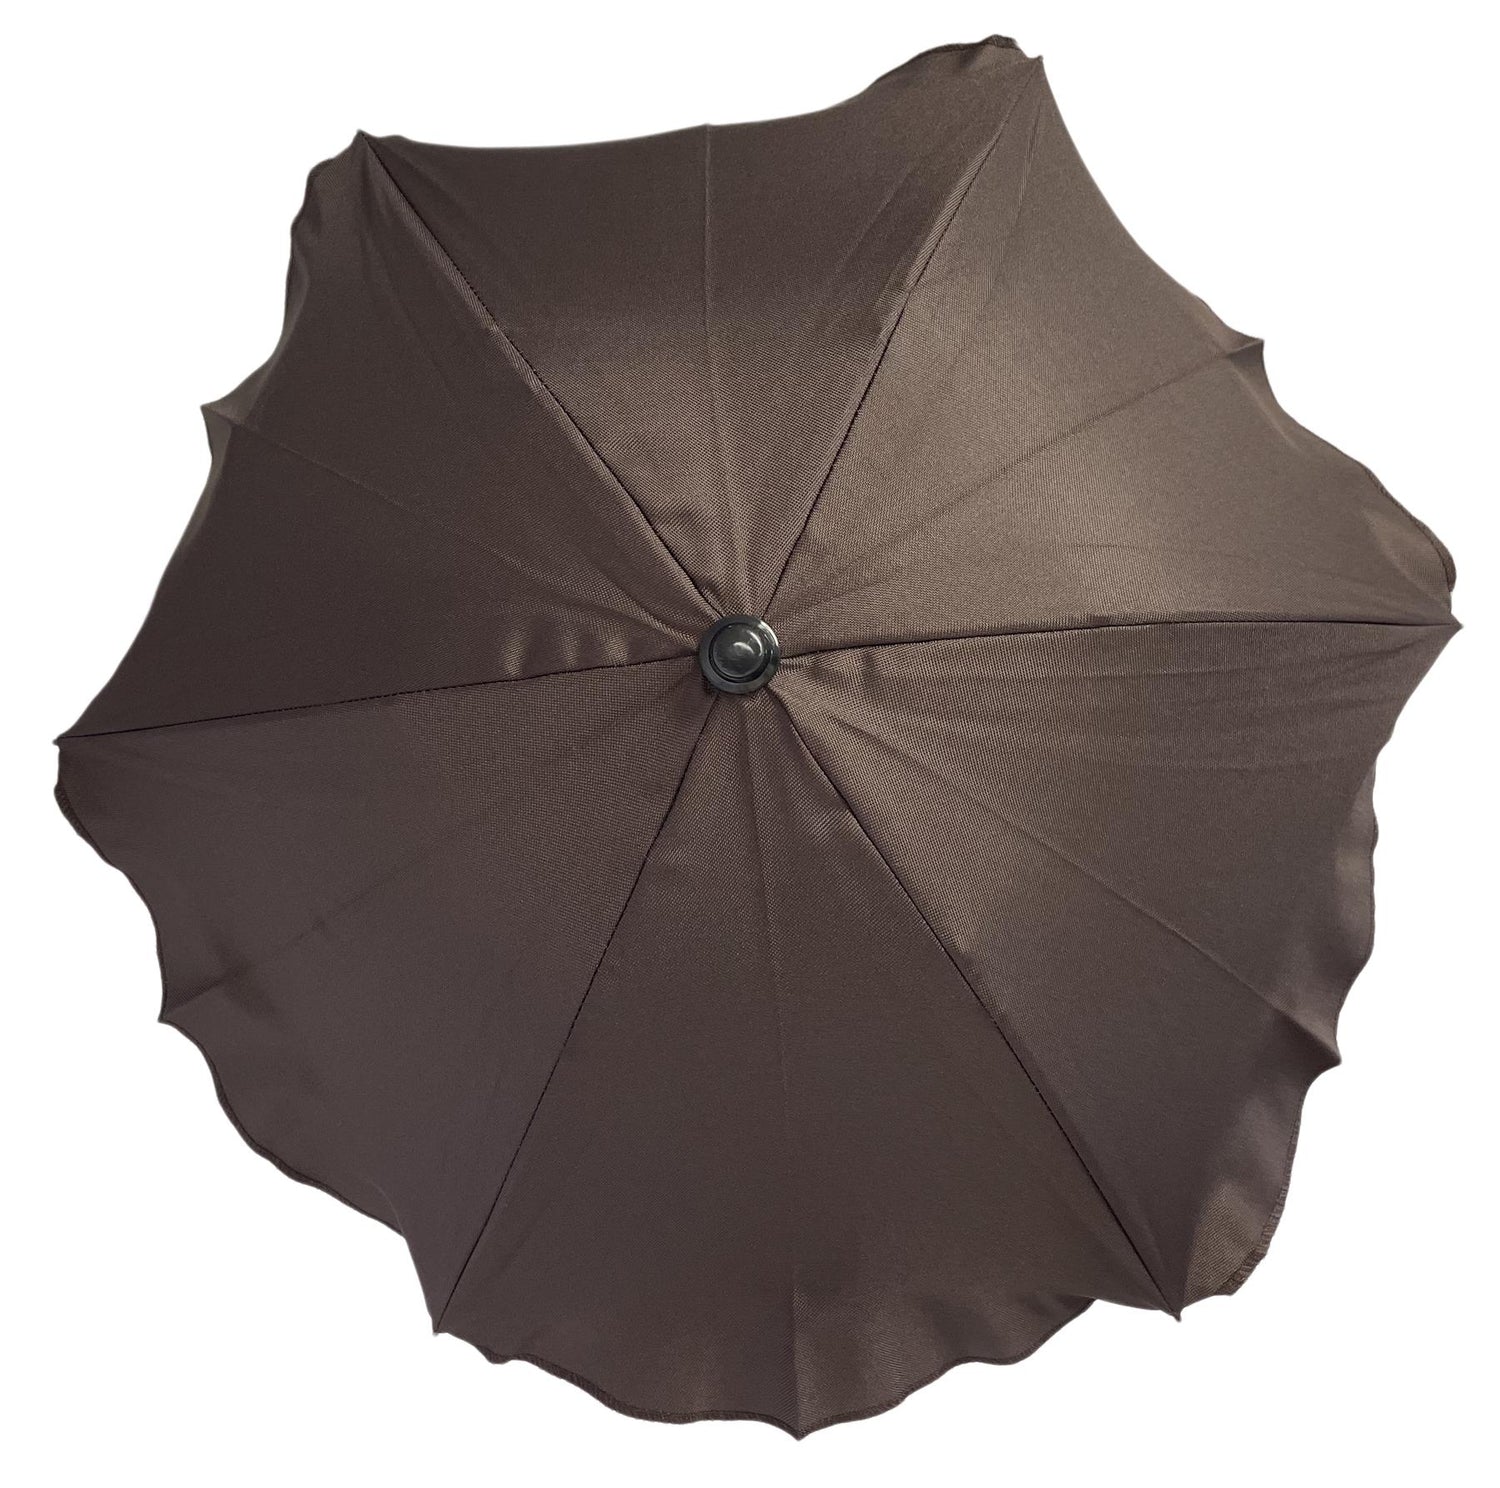 Baby Parasol Universal Sun Umbrella Pram Stroller Canopy Protect From Sun Rain Dark Brown